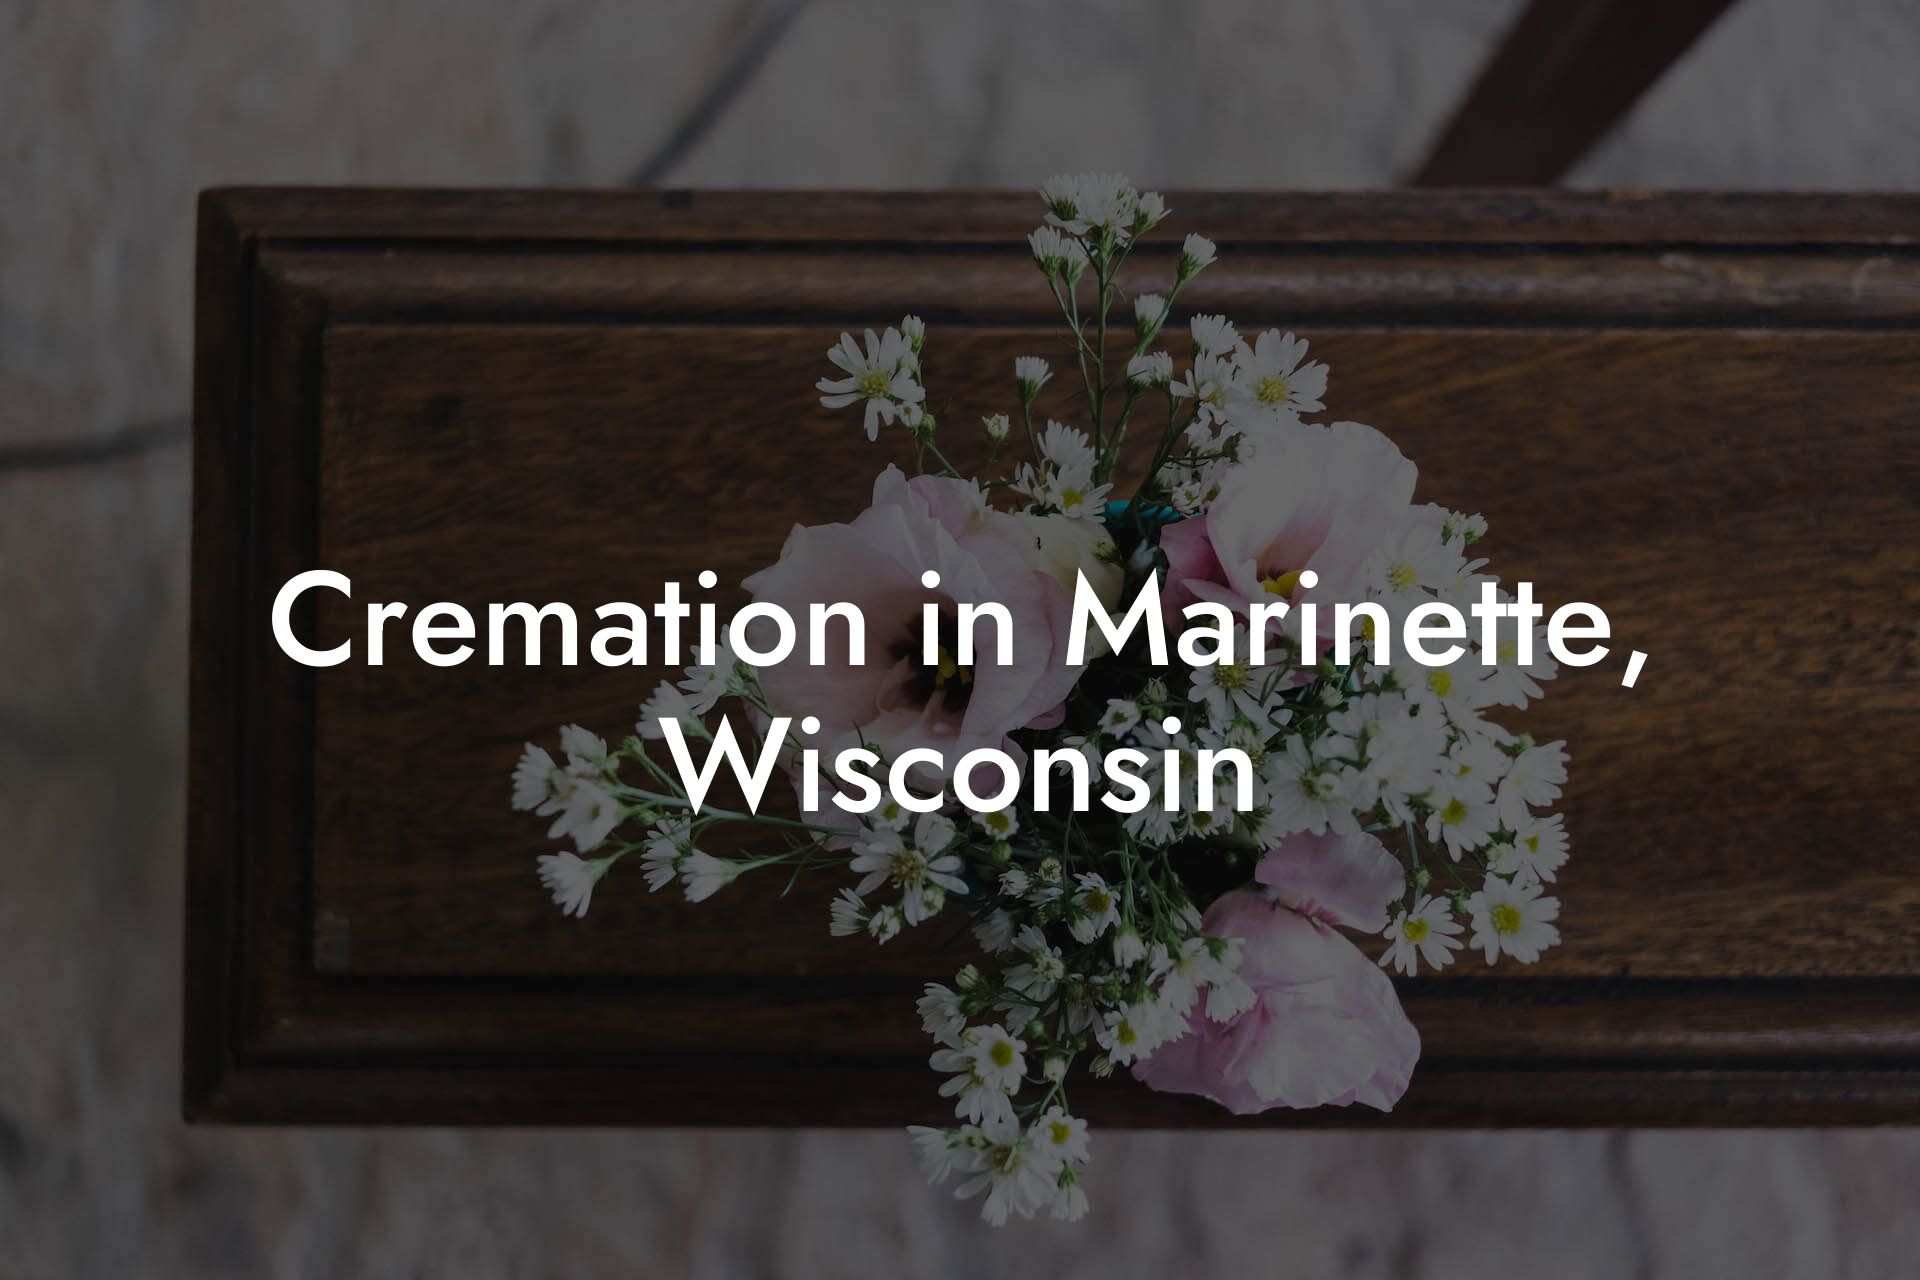 Cremation in Marinette, Wisconsin